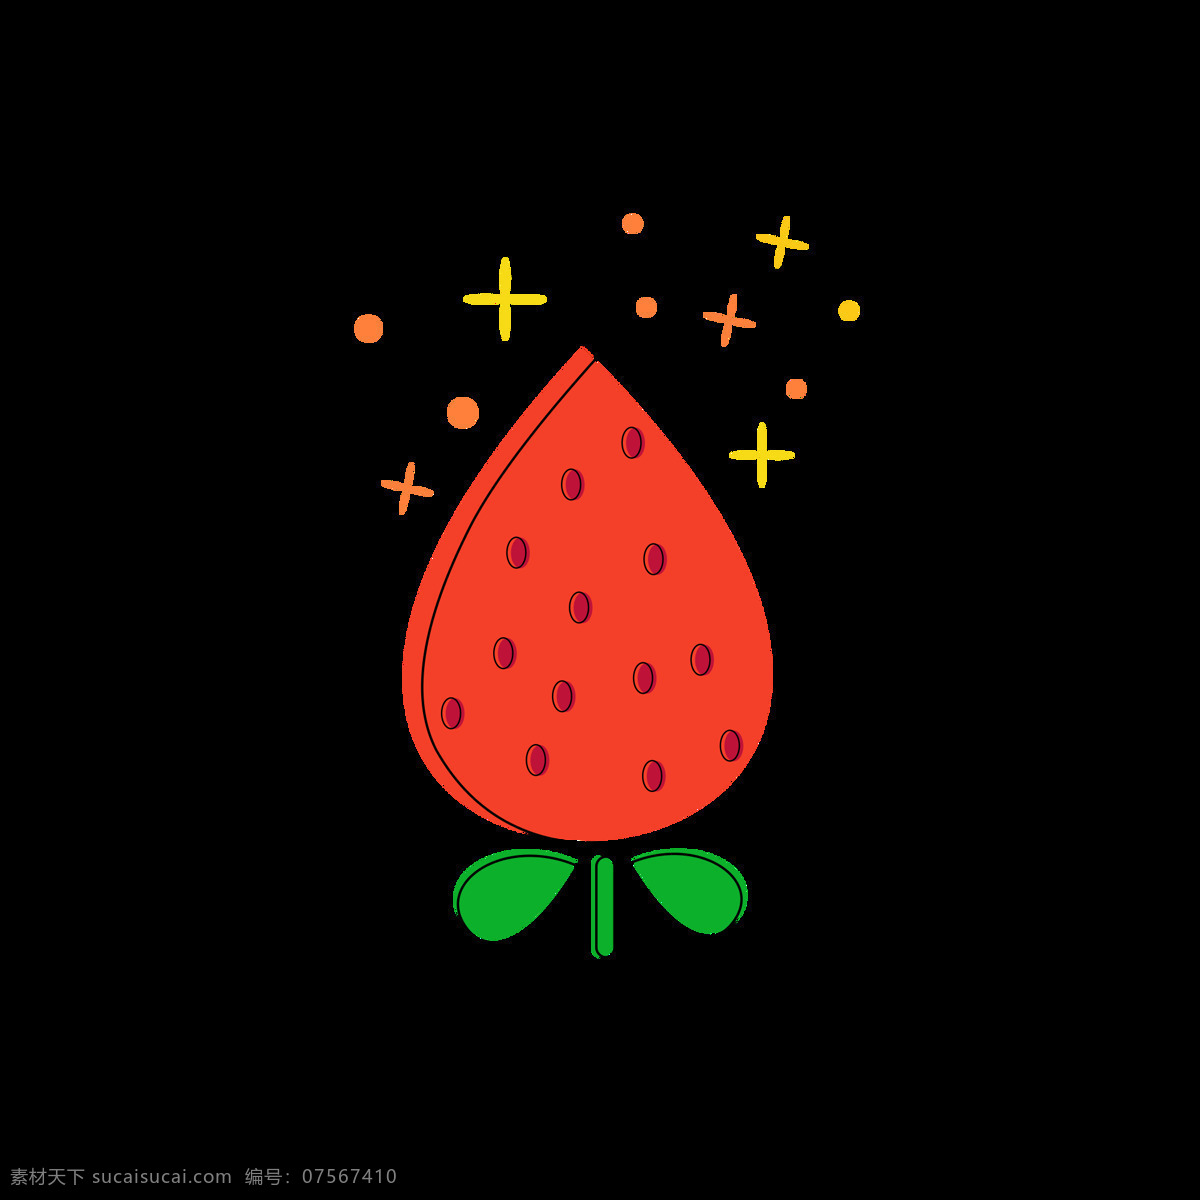 mbe 图标 元素 卡通 可爱 水果 图案 草莓 简约 mbe图标 元素设计